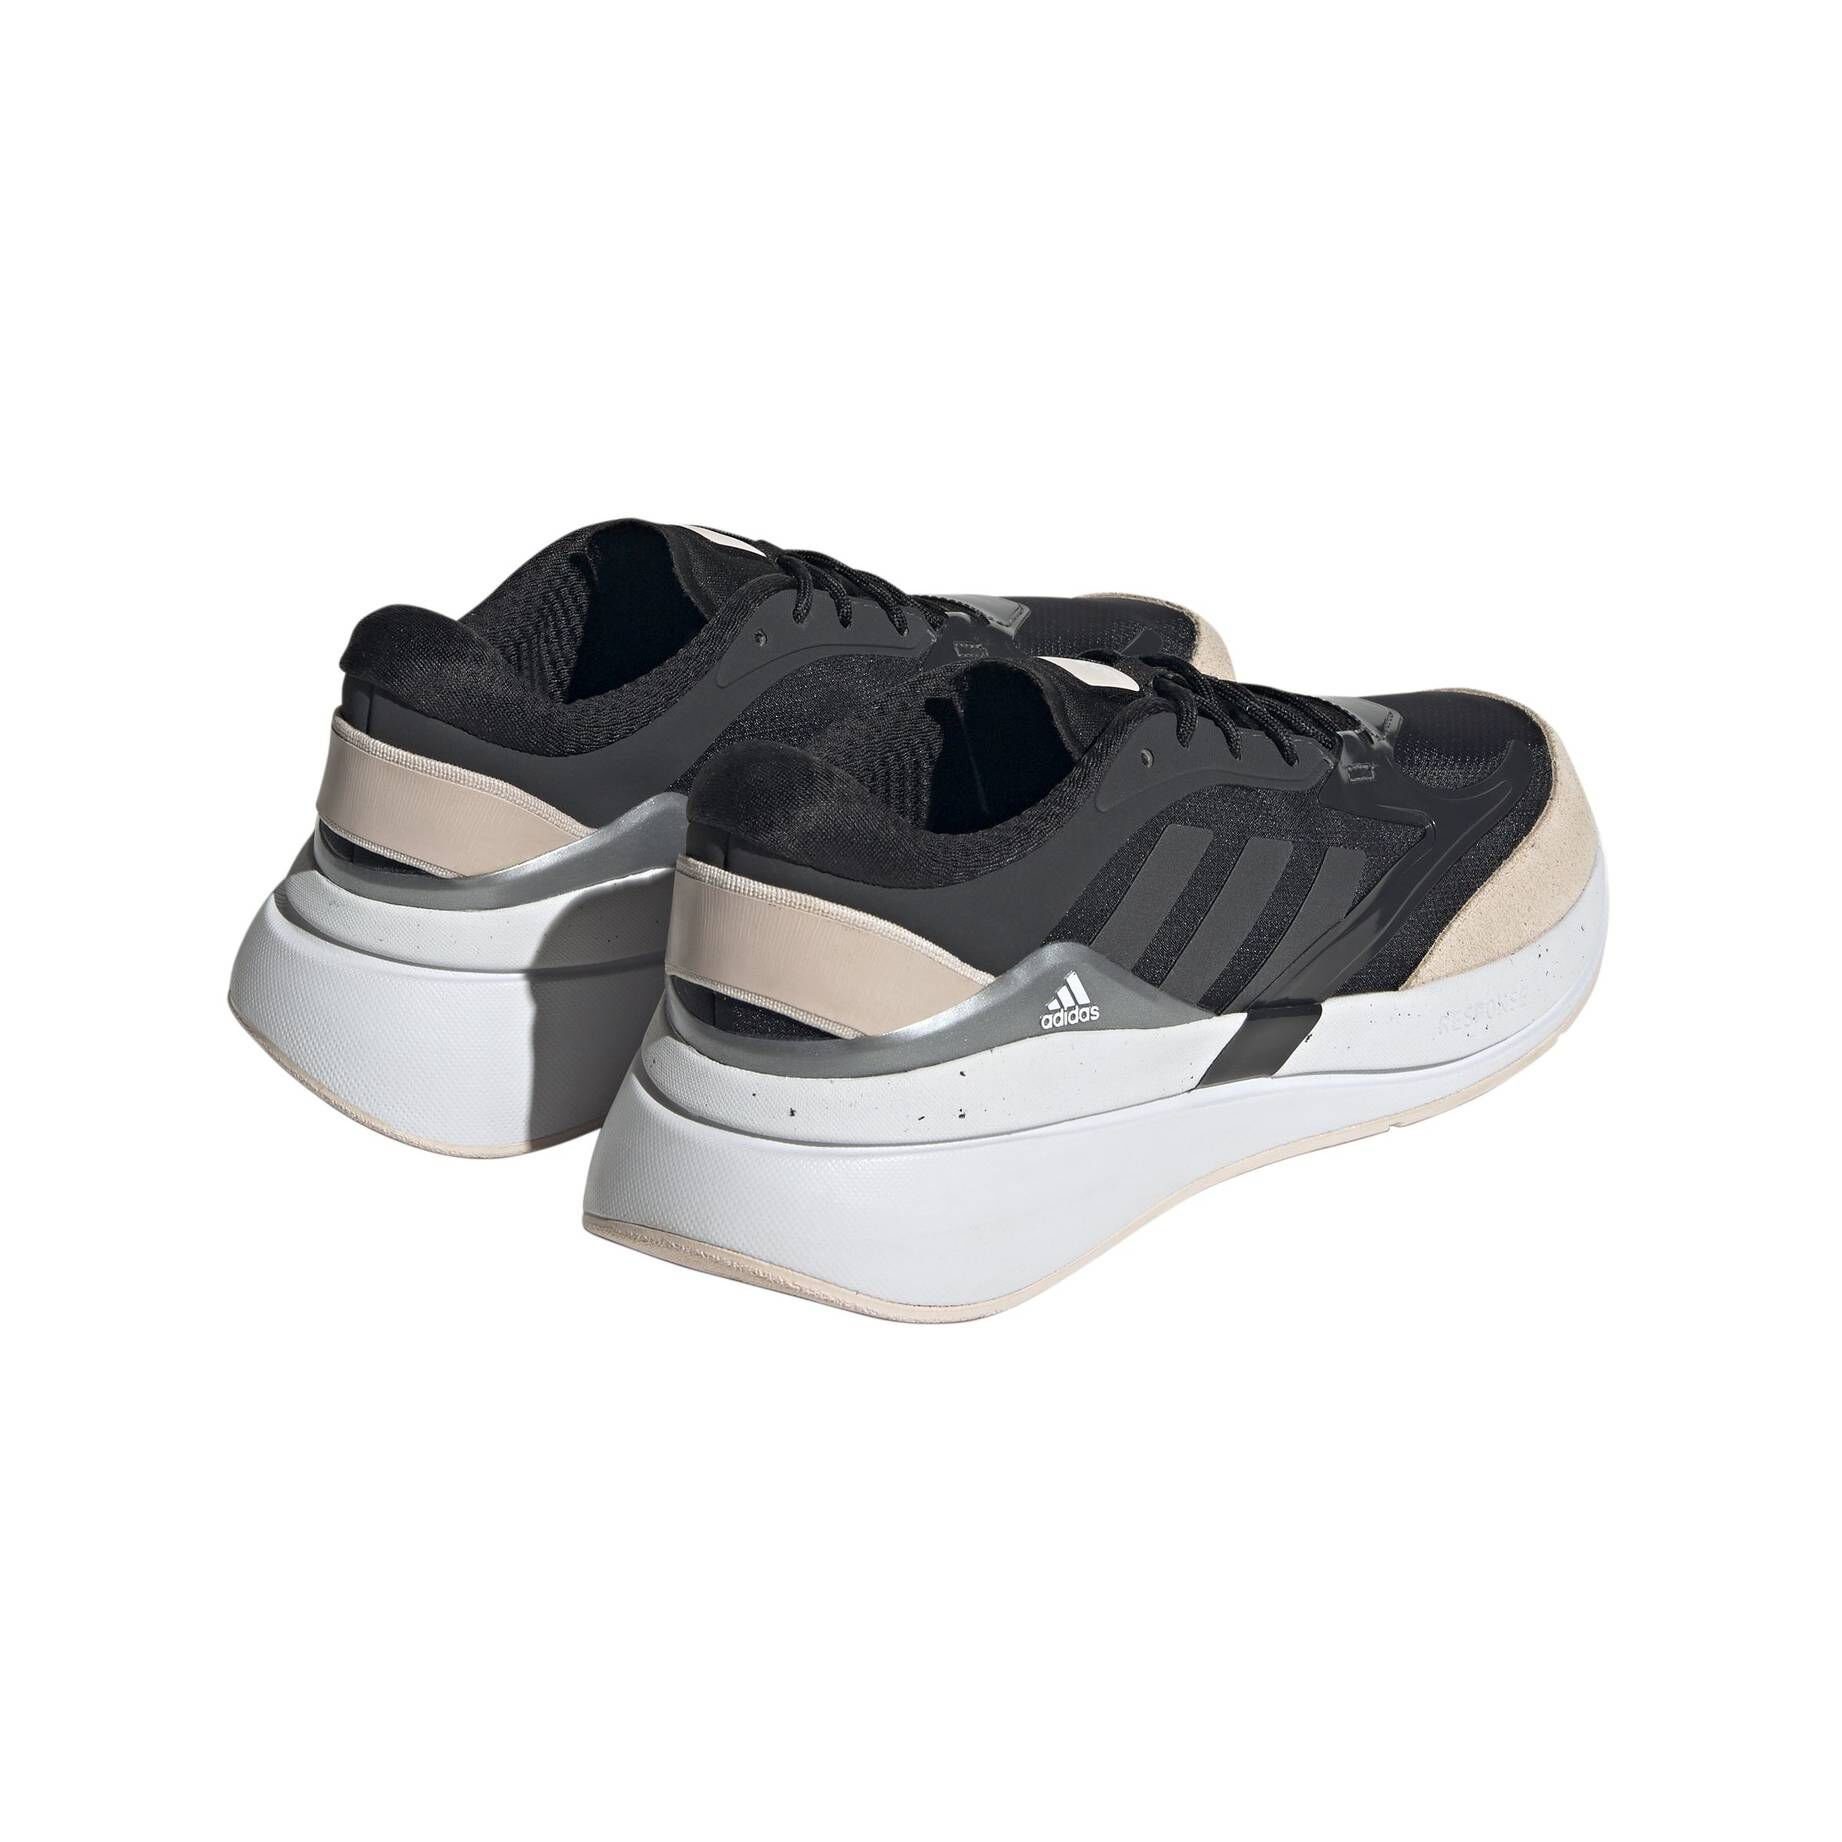 Sneaker Sportswear / Performance Sneaker schwarz anthrazit BREVARD adidas Damen adidas